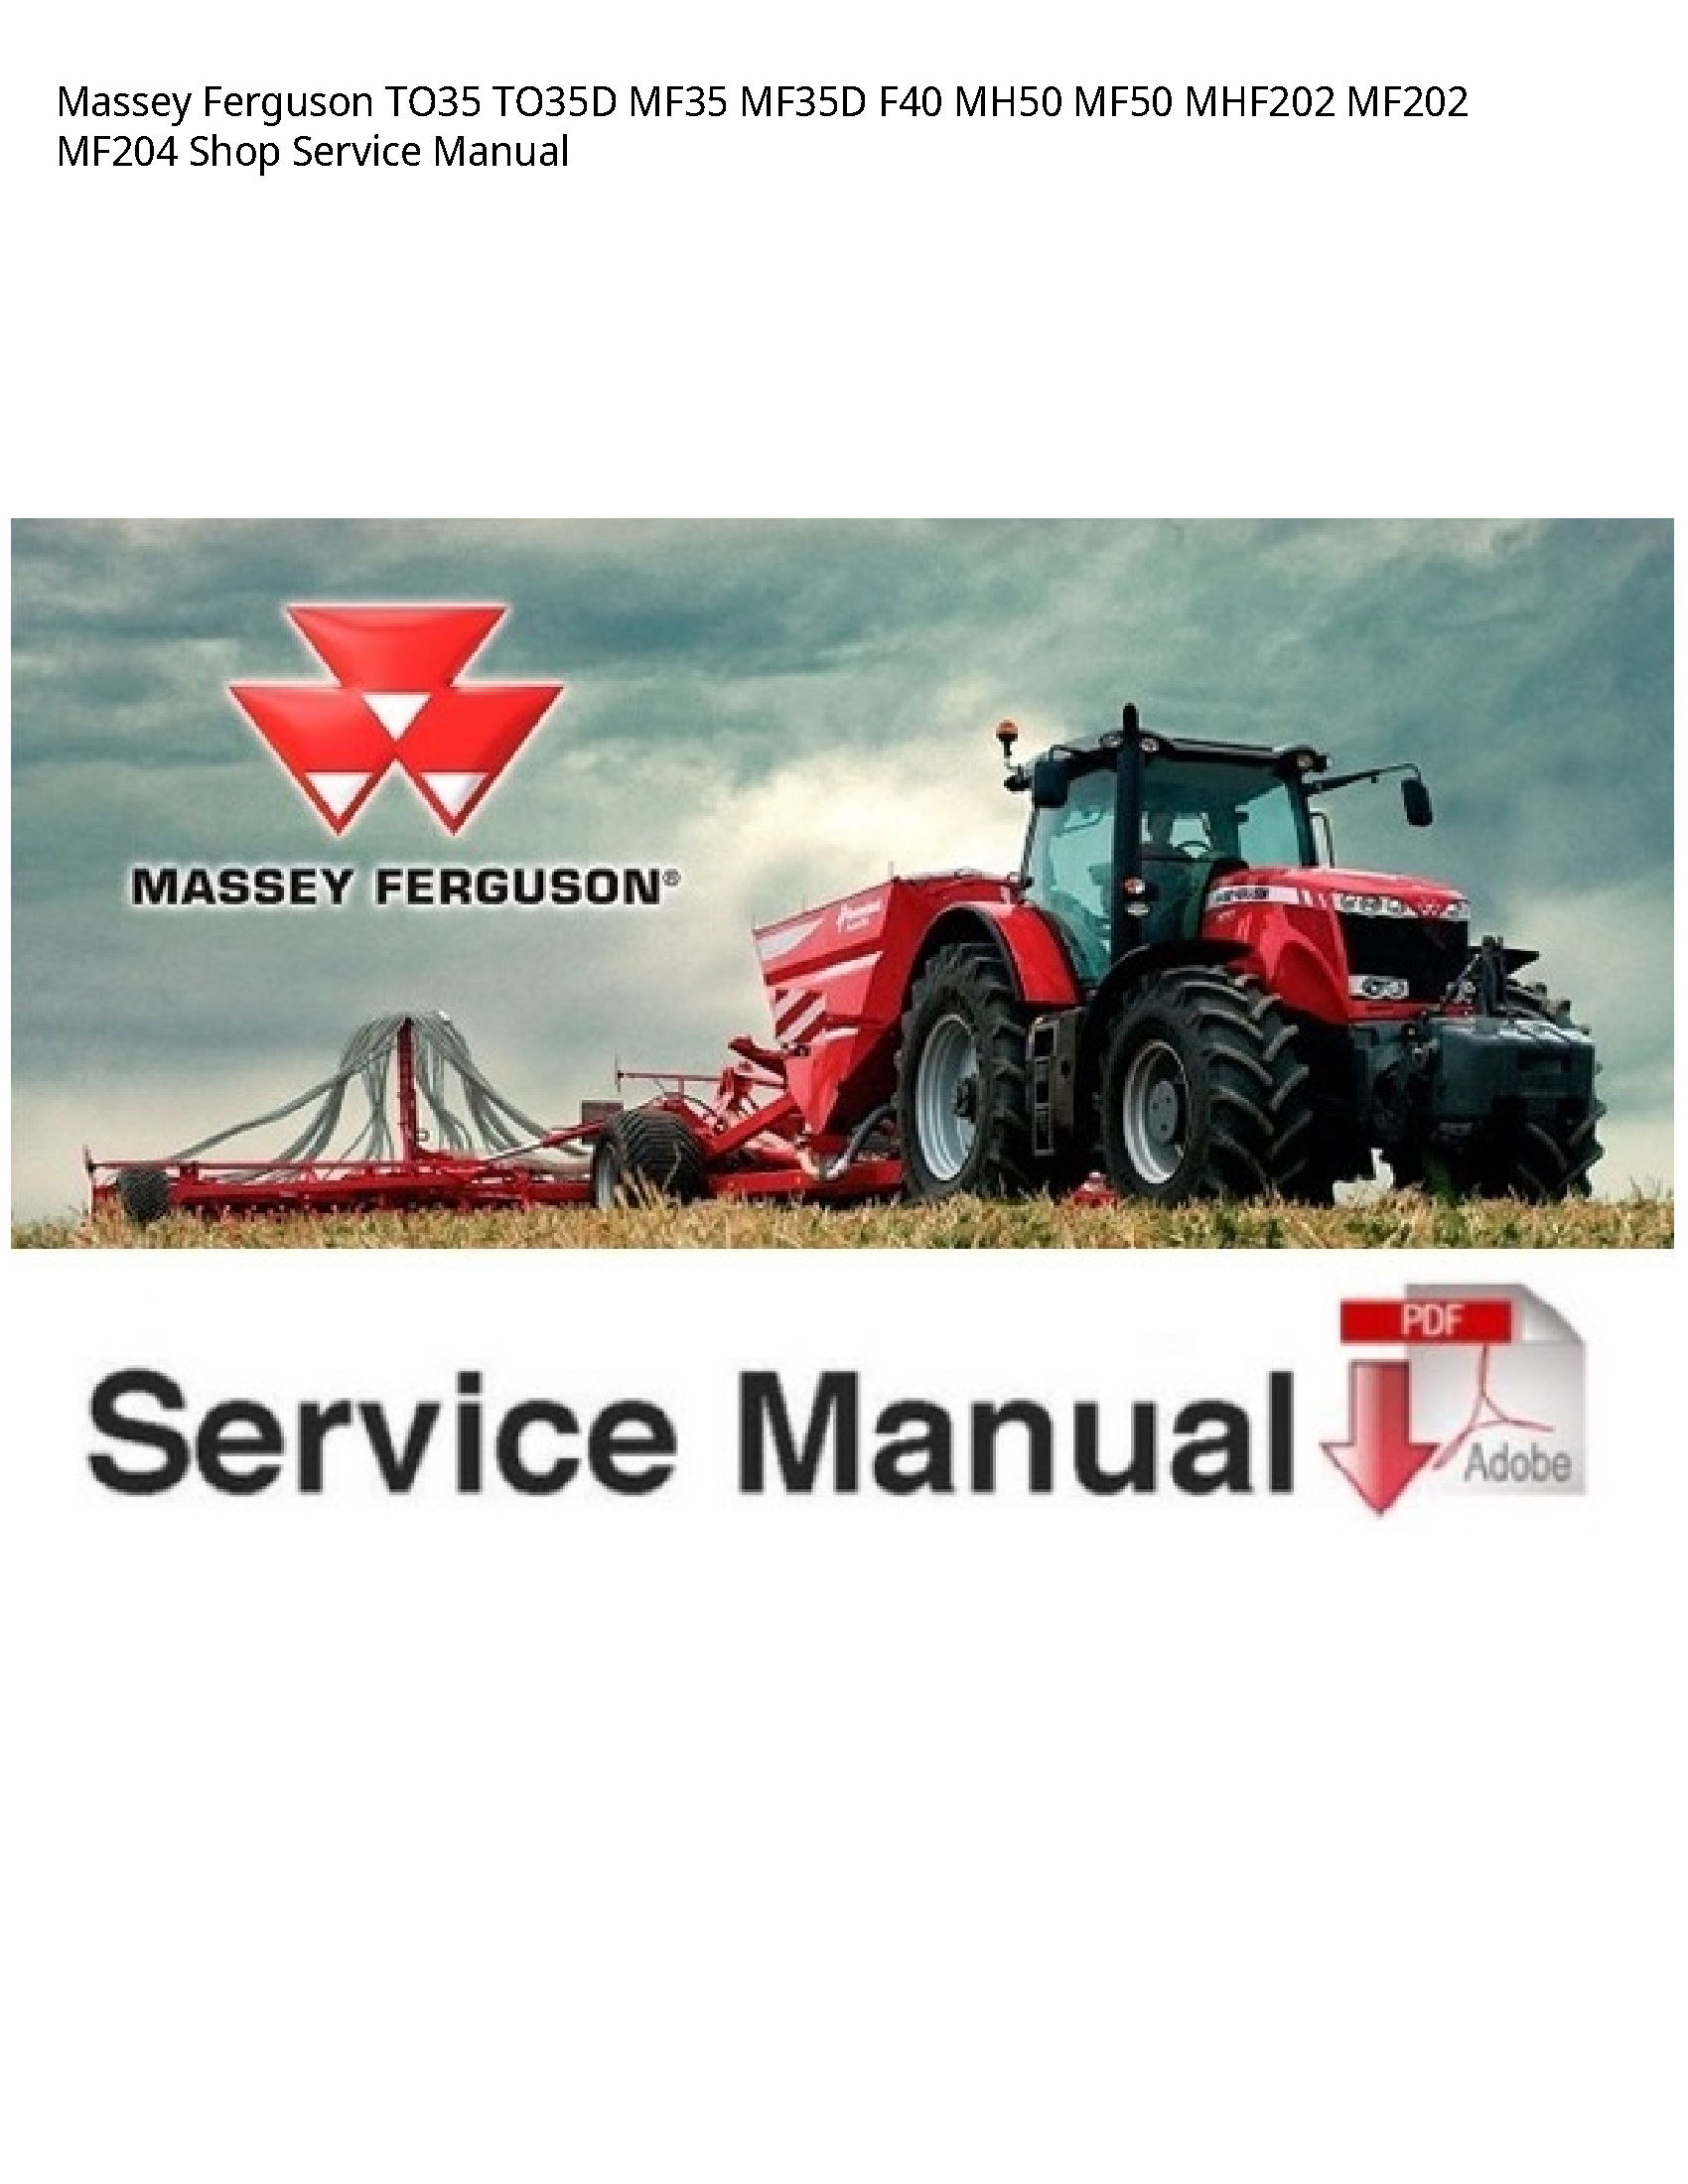 Massey Ferguson TO35 Shop Service manual